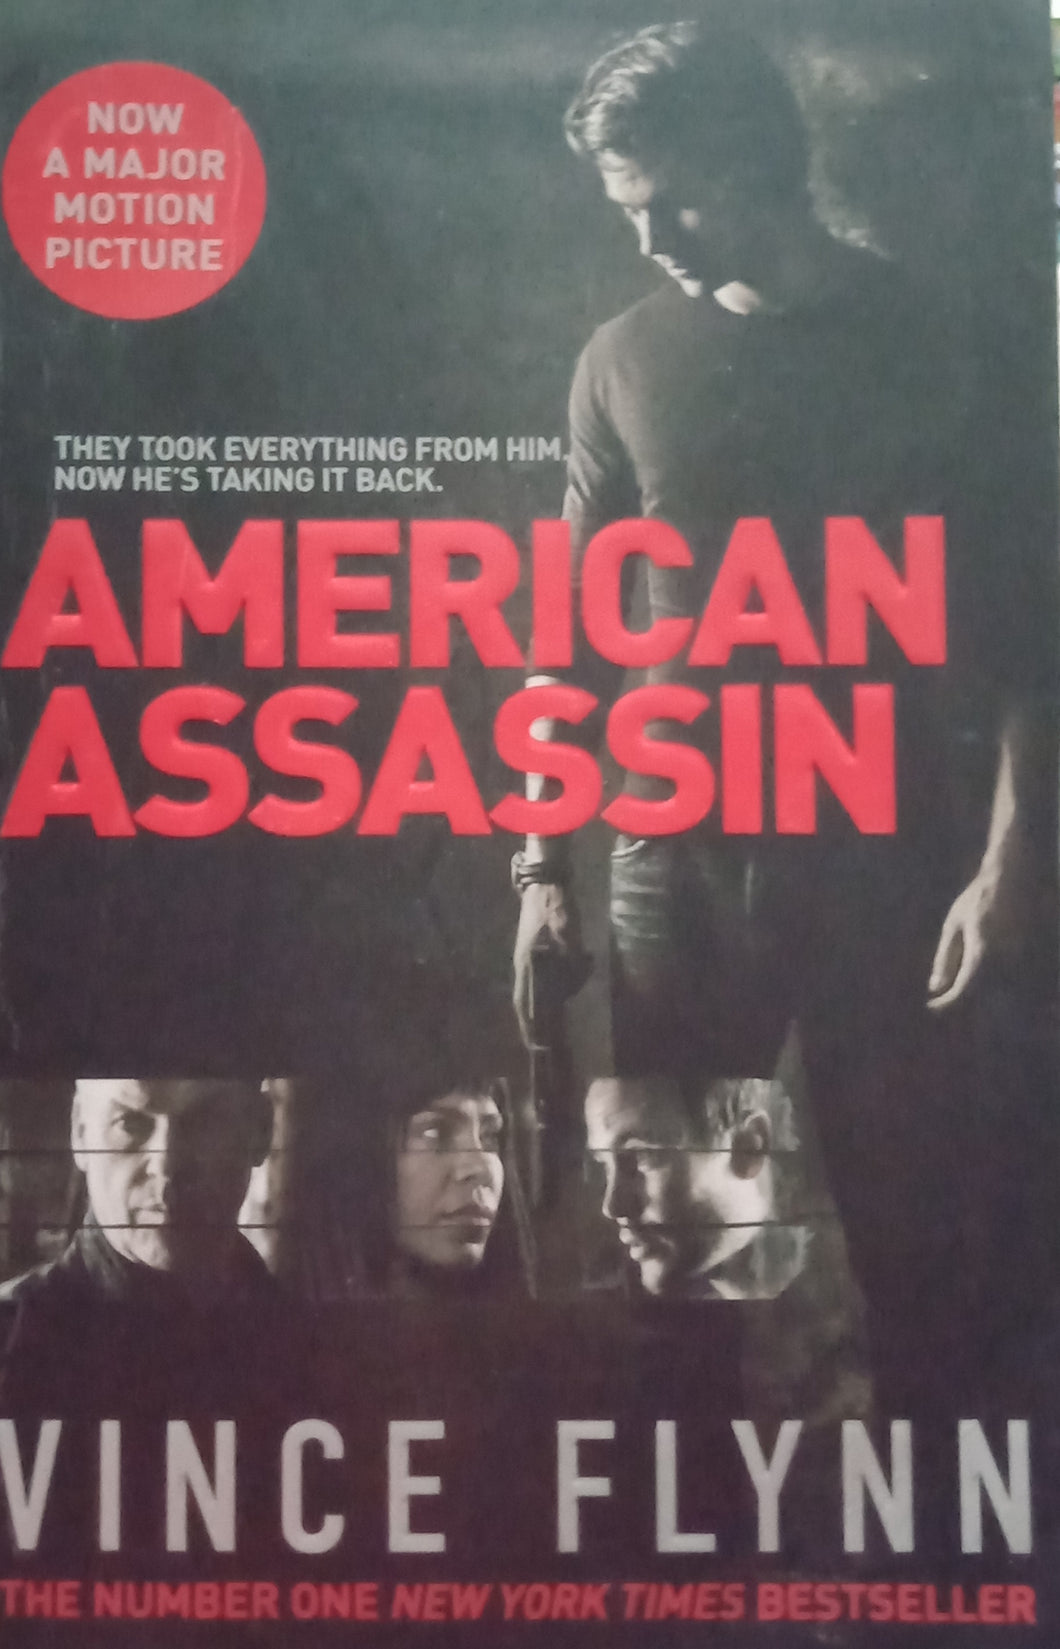 American Assasin by Vince Flynn